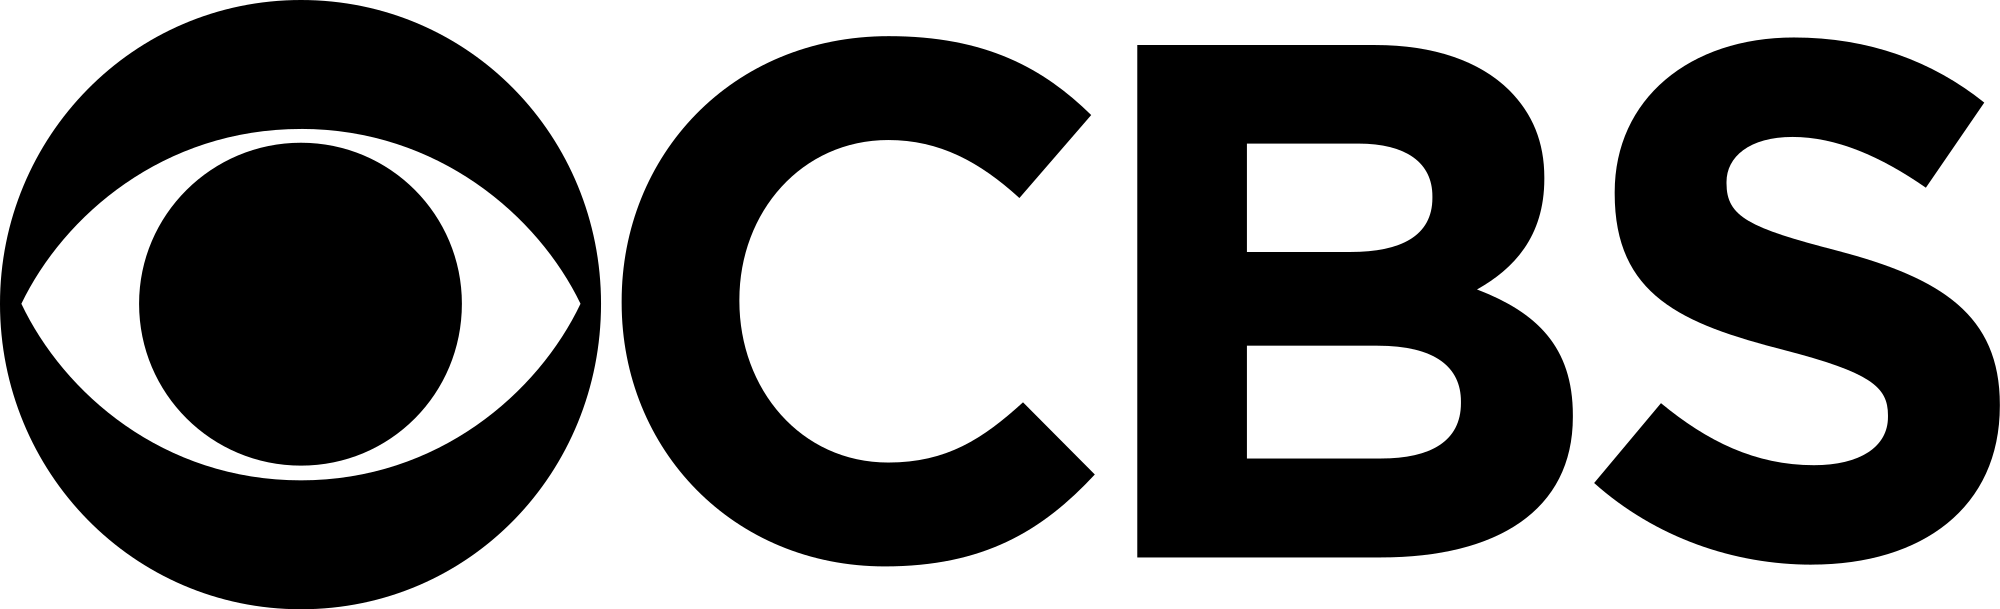 CBS Logo - File:CBS logo.svg - Wikimedia Commons